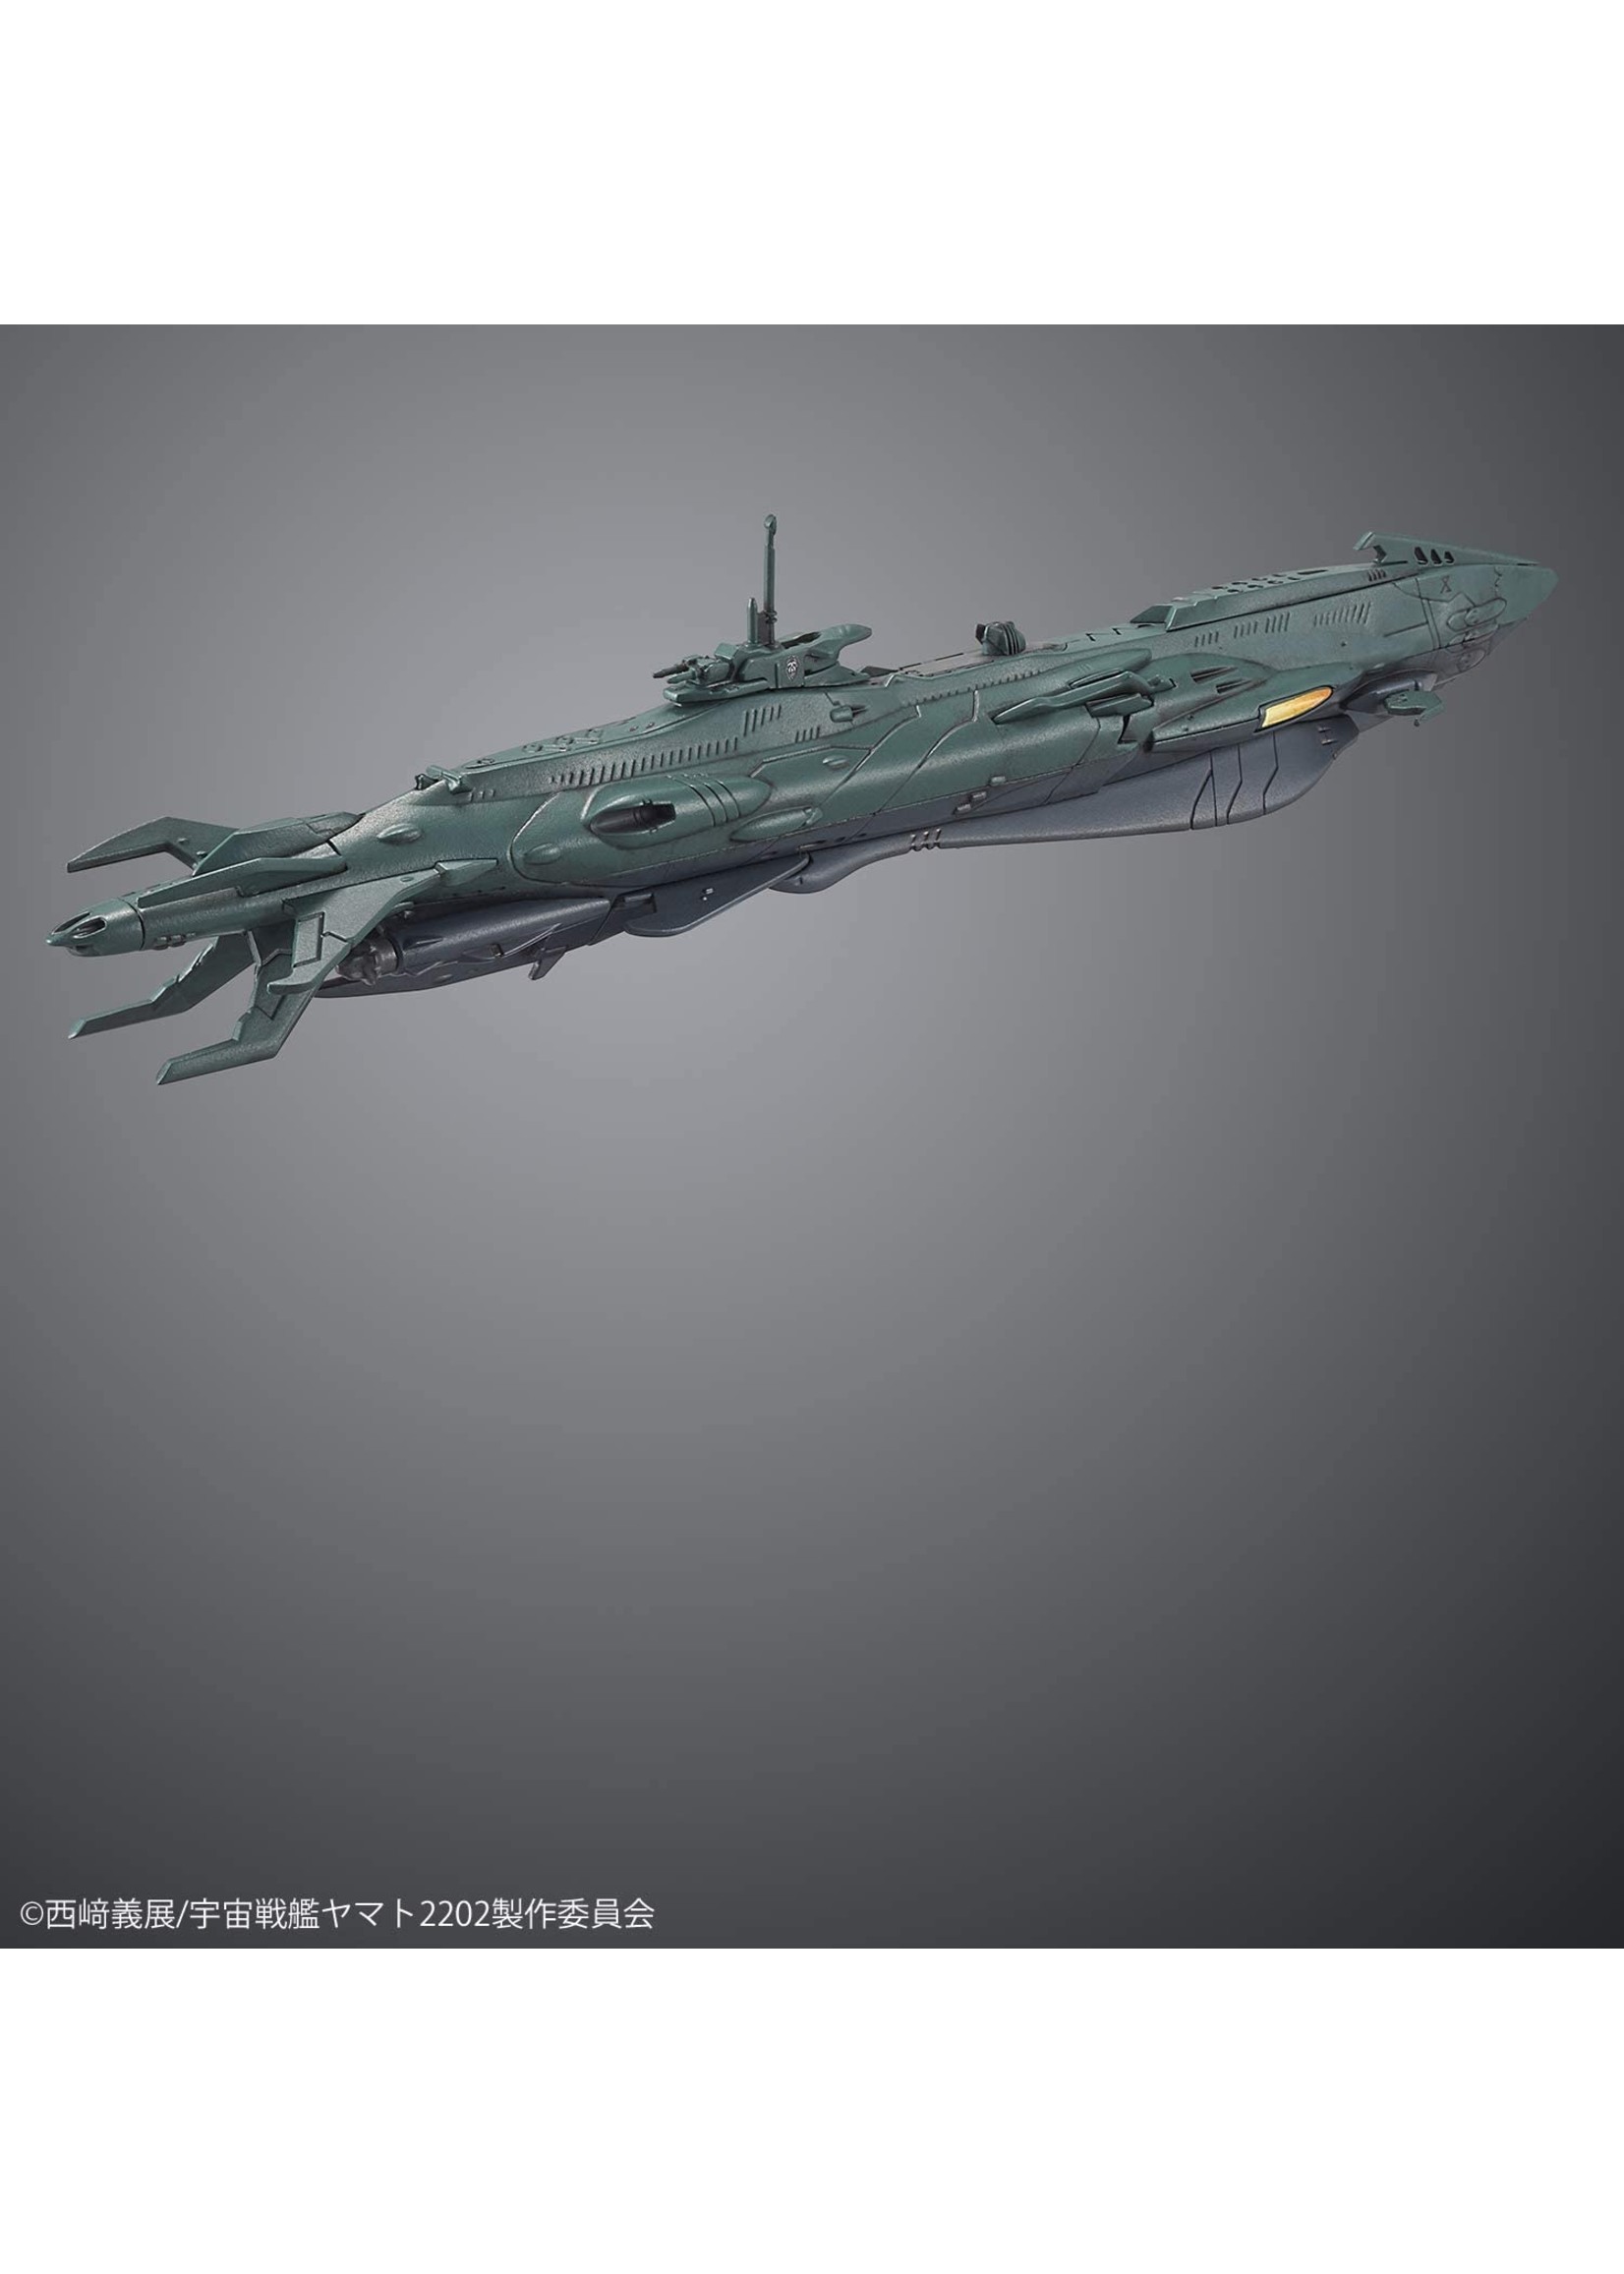 Bandai Dimensional Submarine Set